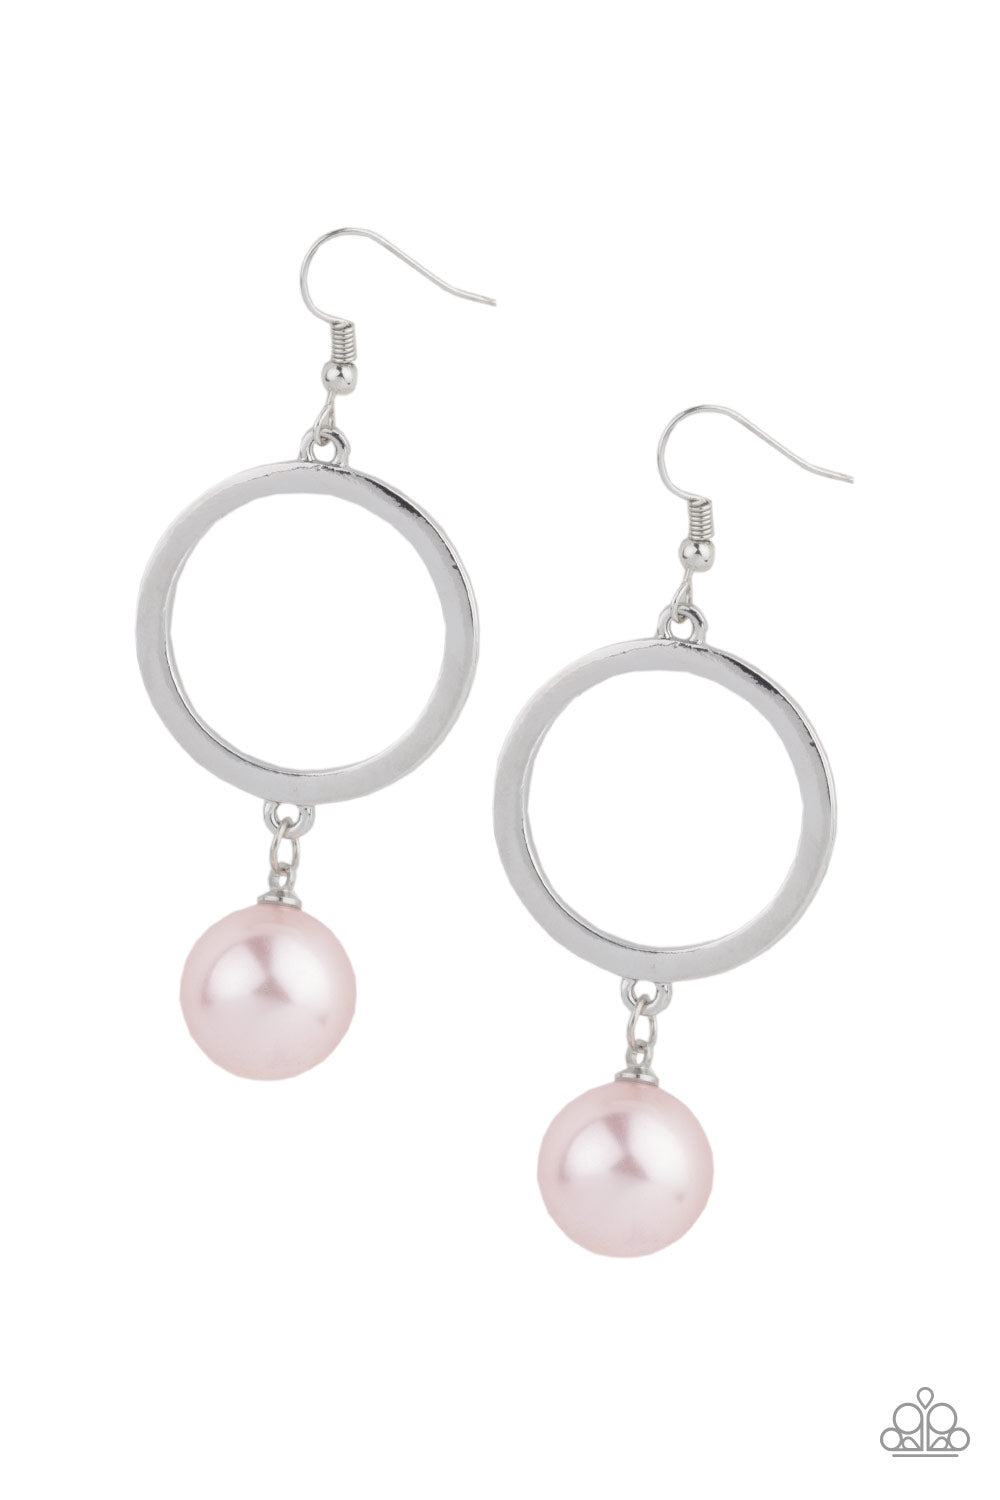 SoHo Solo - Pink earrings